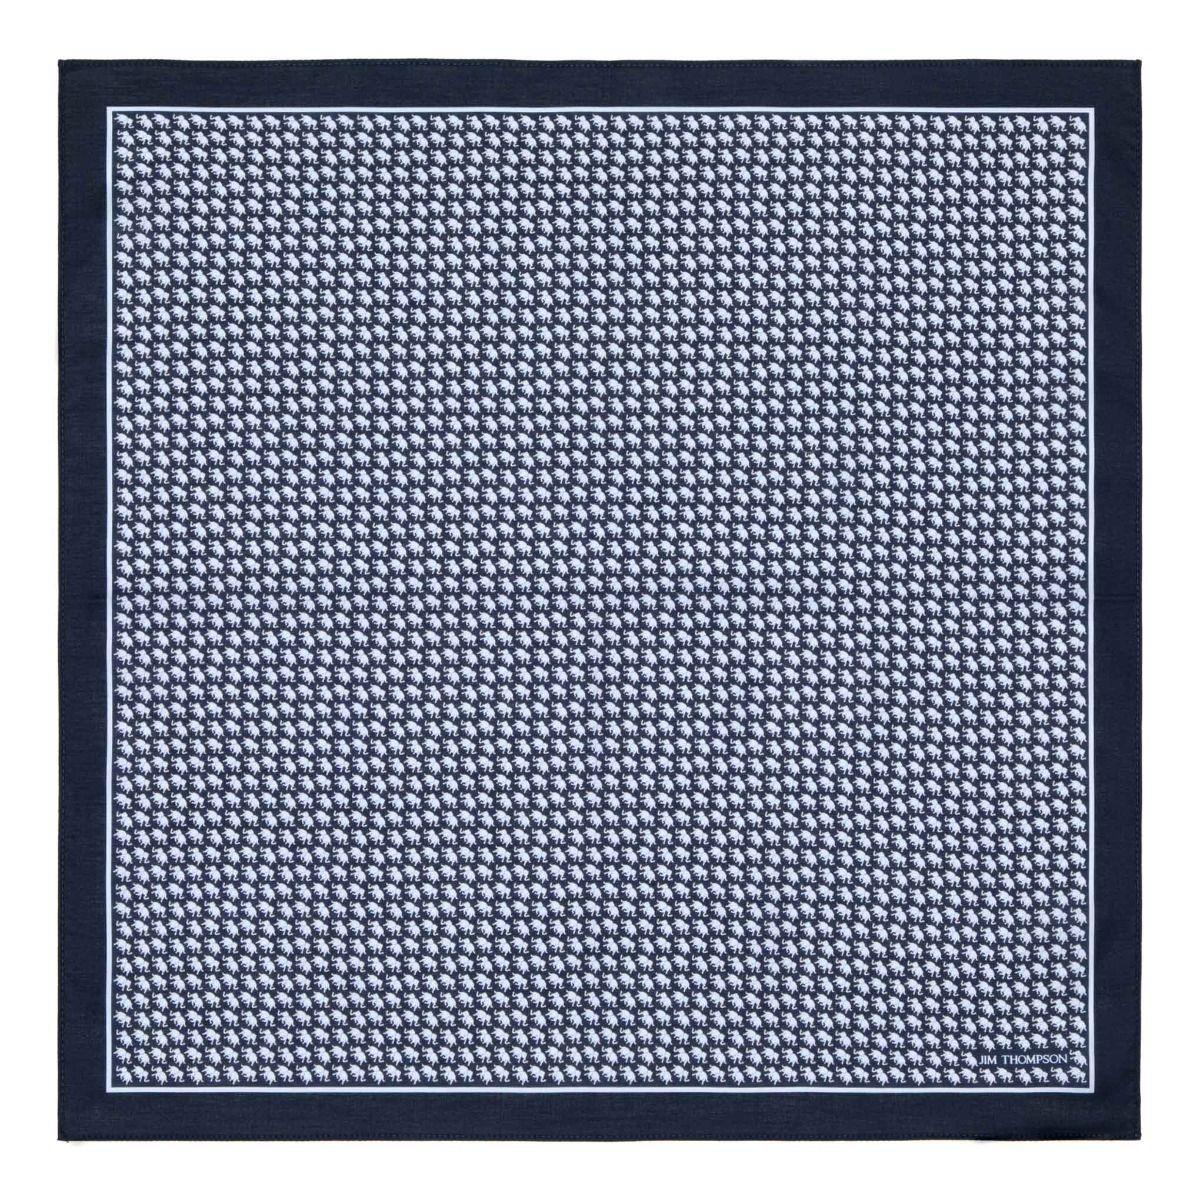 Elephant Cotton Handkerchief - Navy/White